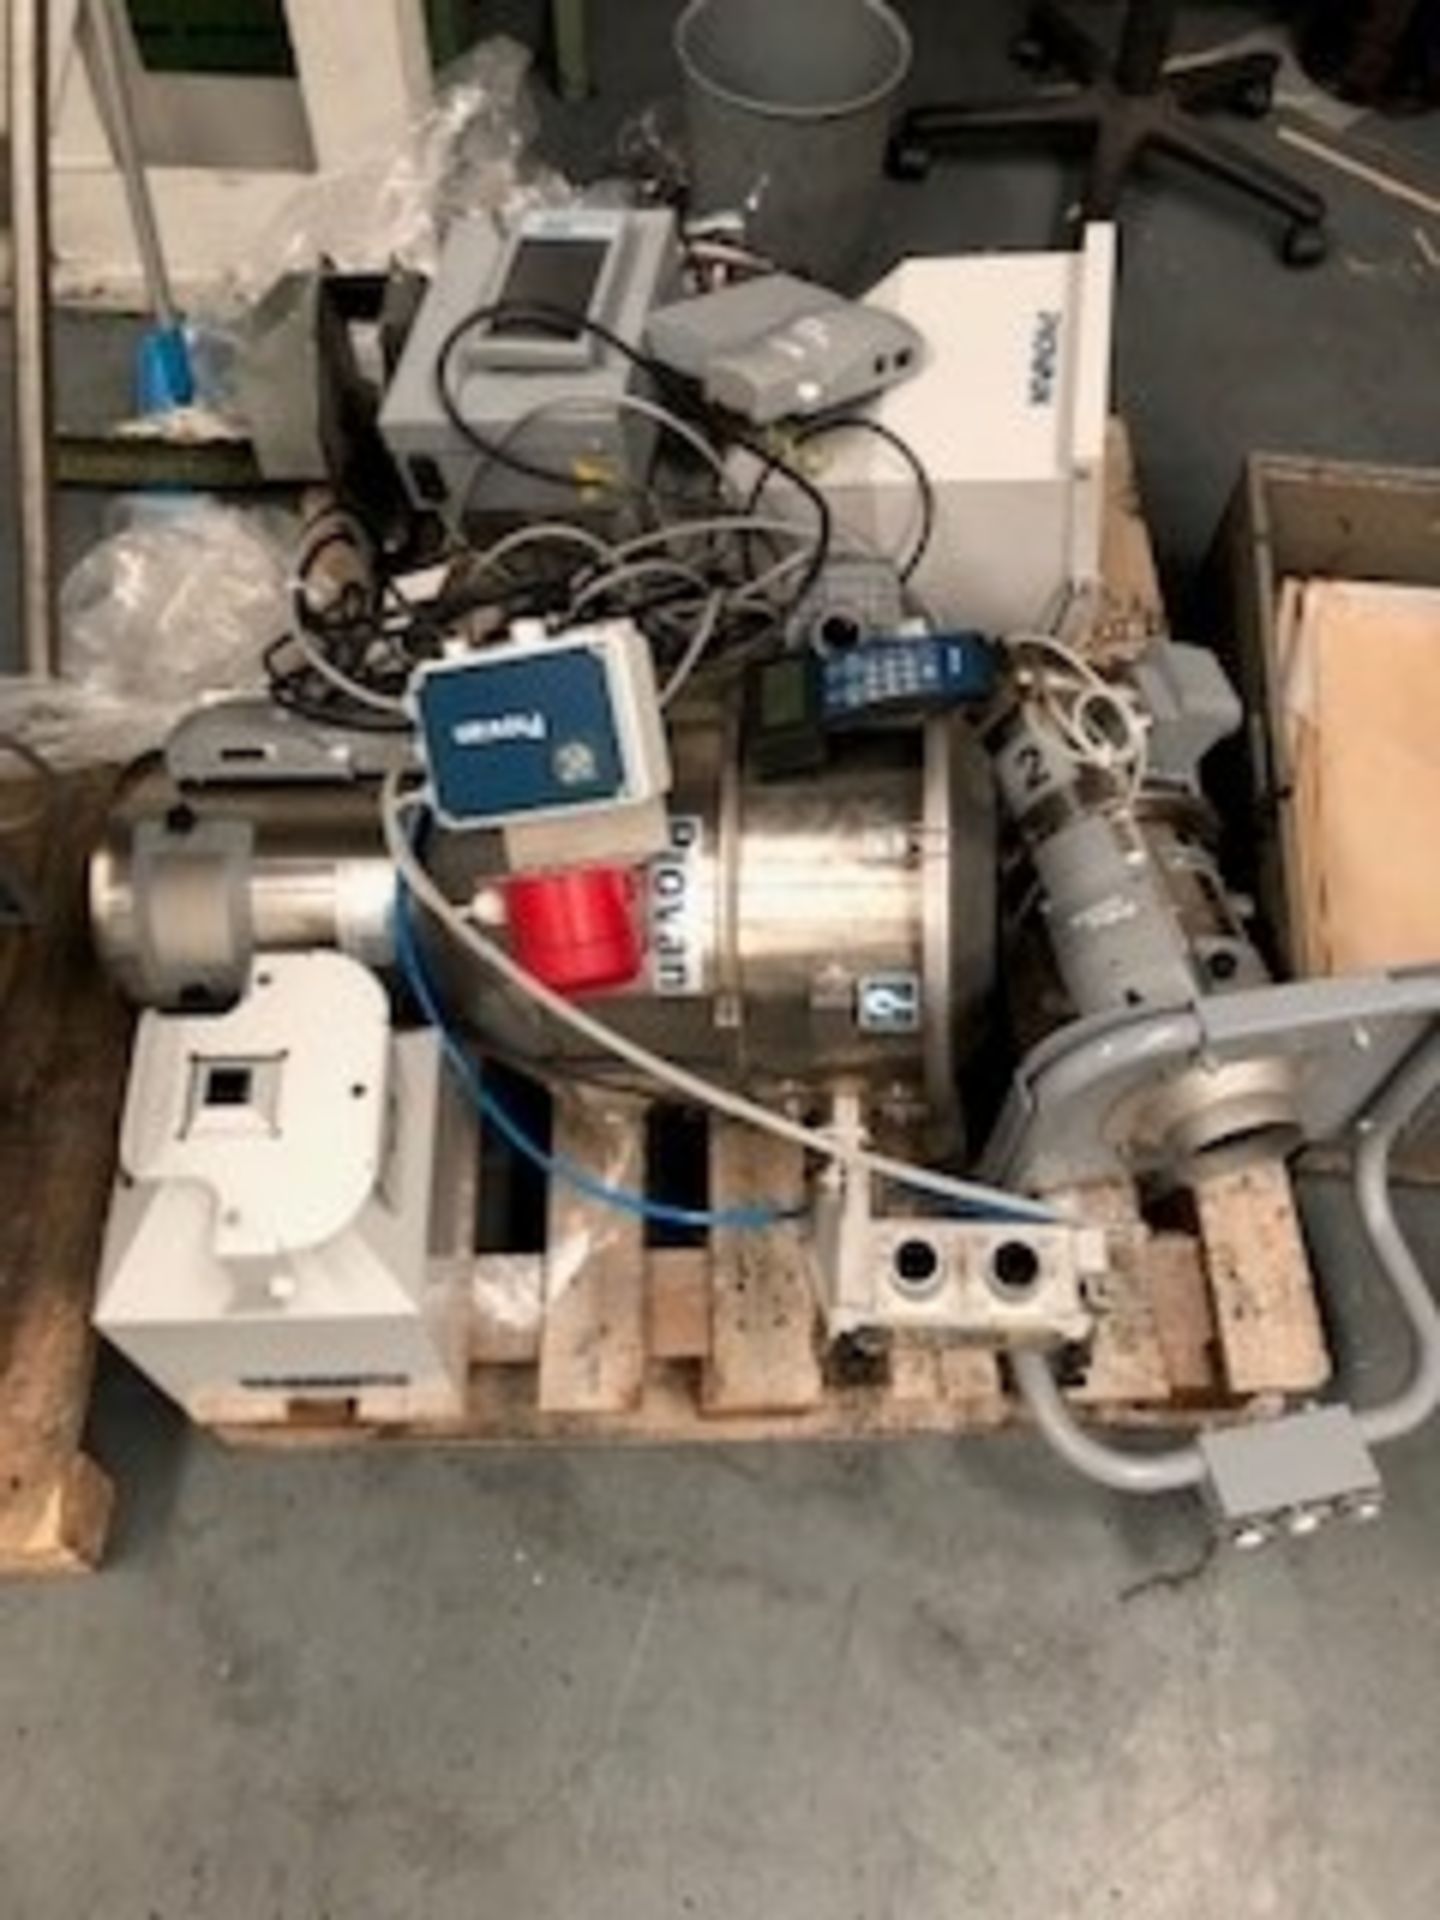 PIOVAN F48 Vacuum Unit, Model F480899, Serial No. 01416VU16, YoM 2016, PIOVAN PF15 Vaccum - Image 2 of 2